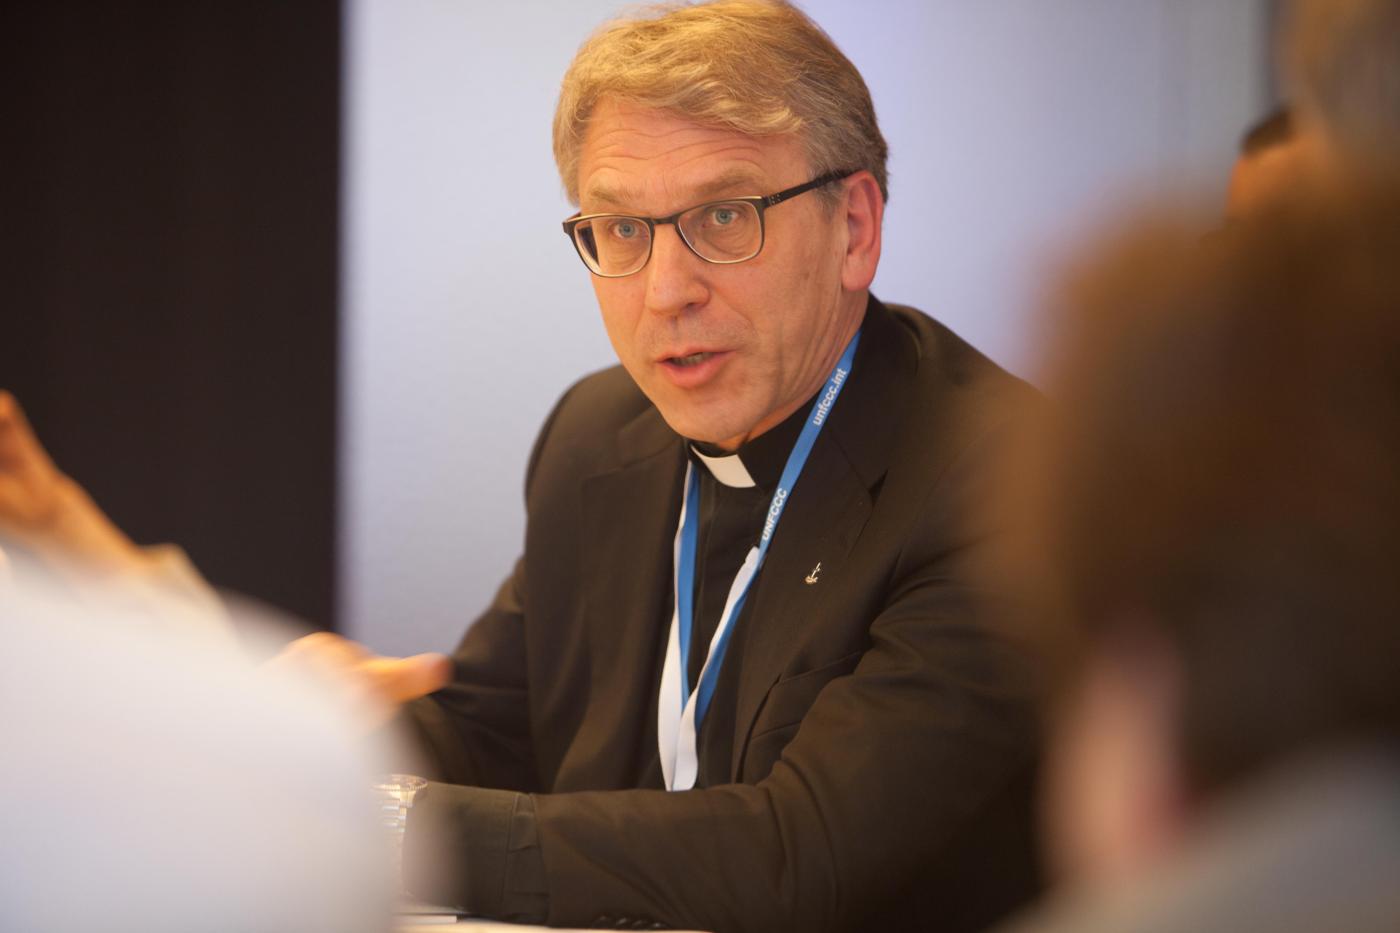 WCC general secretary Rev. Dr Olav Fykse Tveit at the UN climate talks in Paris. © Sean Hawkey/WCC